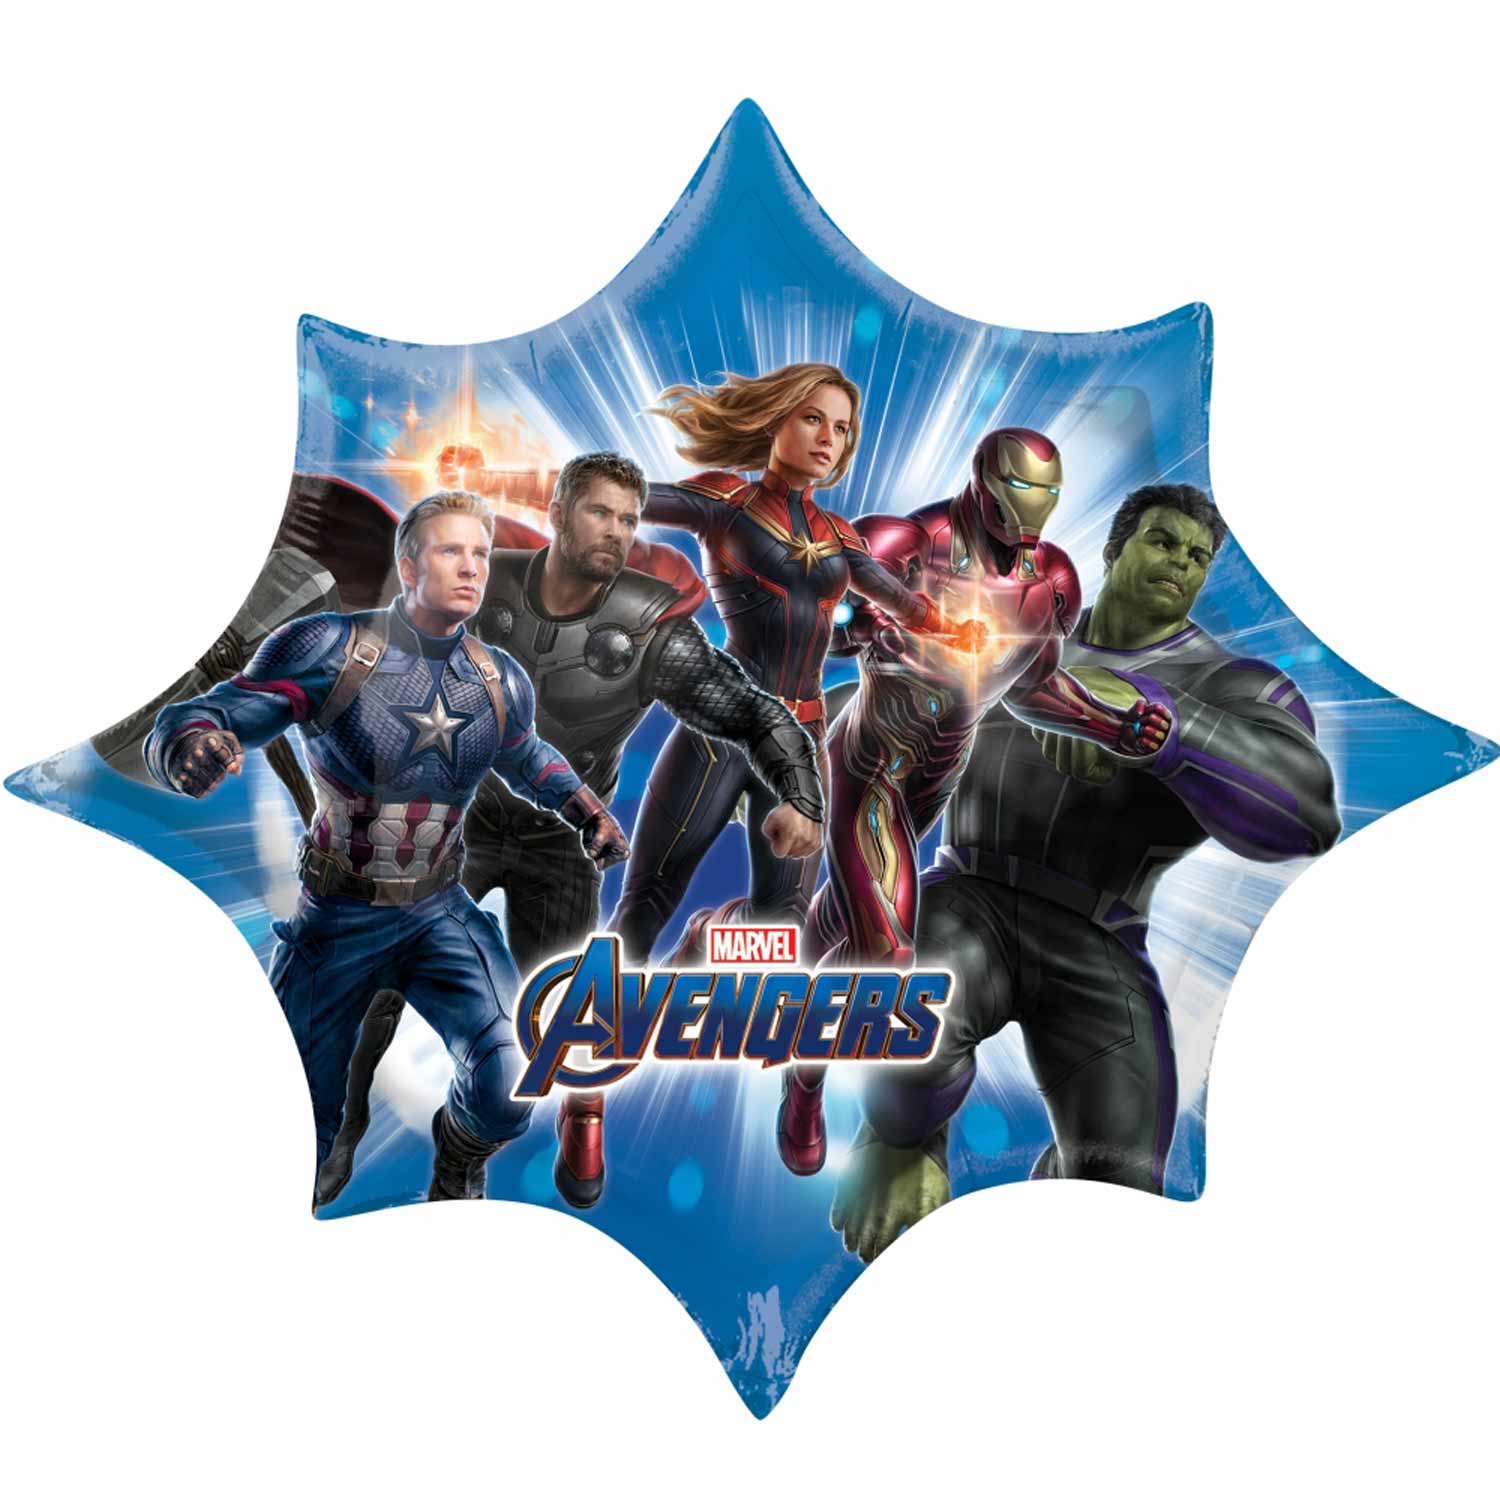 Avengers Endgame SuperShape 88x73cm Balloons & Streamers - Party Centre - Party Centre